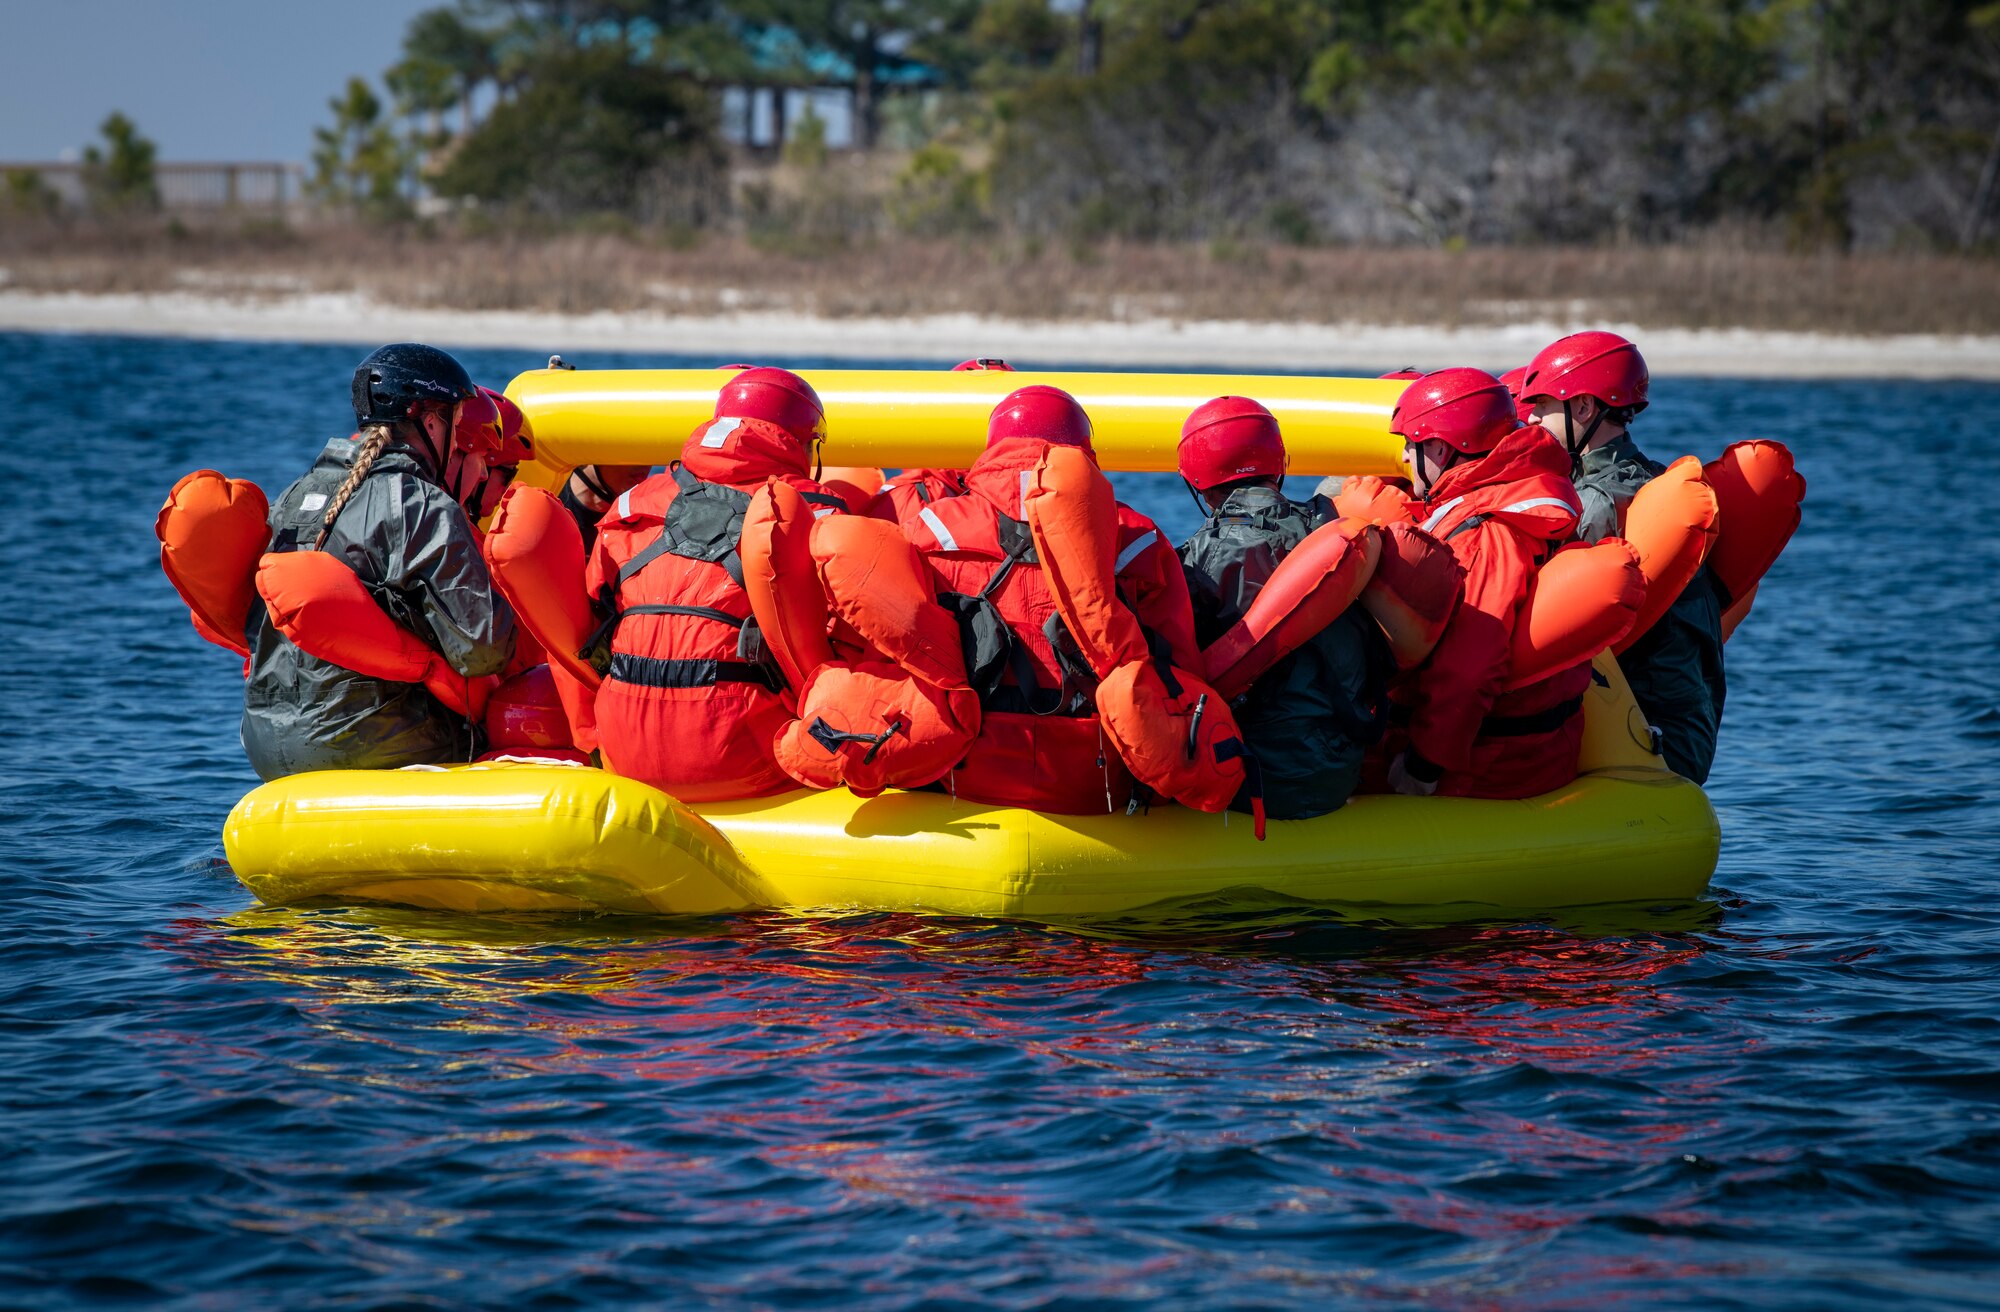 Water Survival Training participants board a life raft Feb. 15, 2022, at Hurlburt Field, Florida